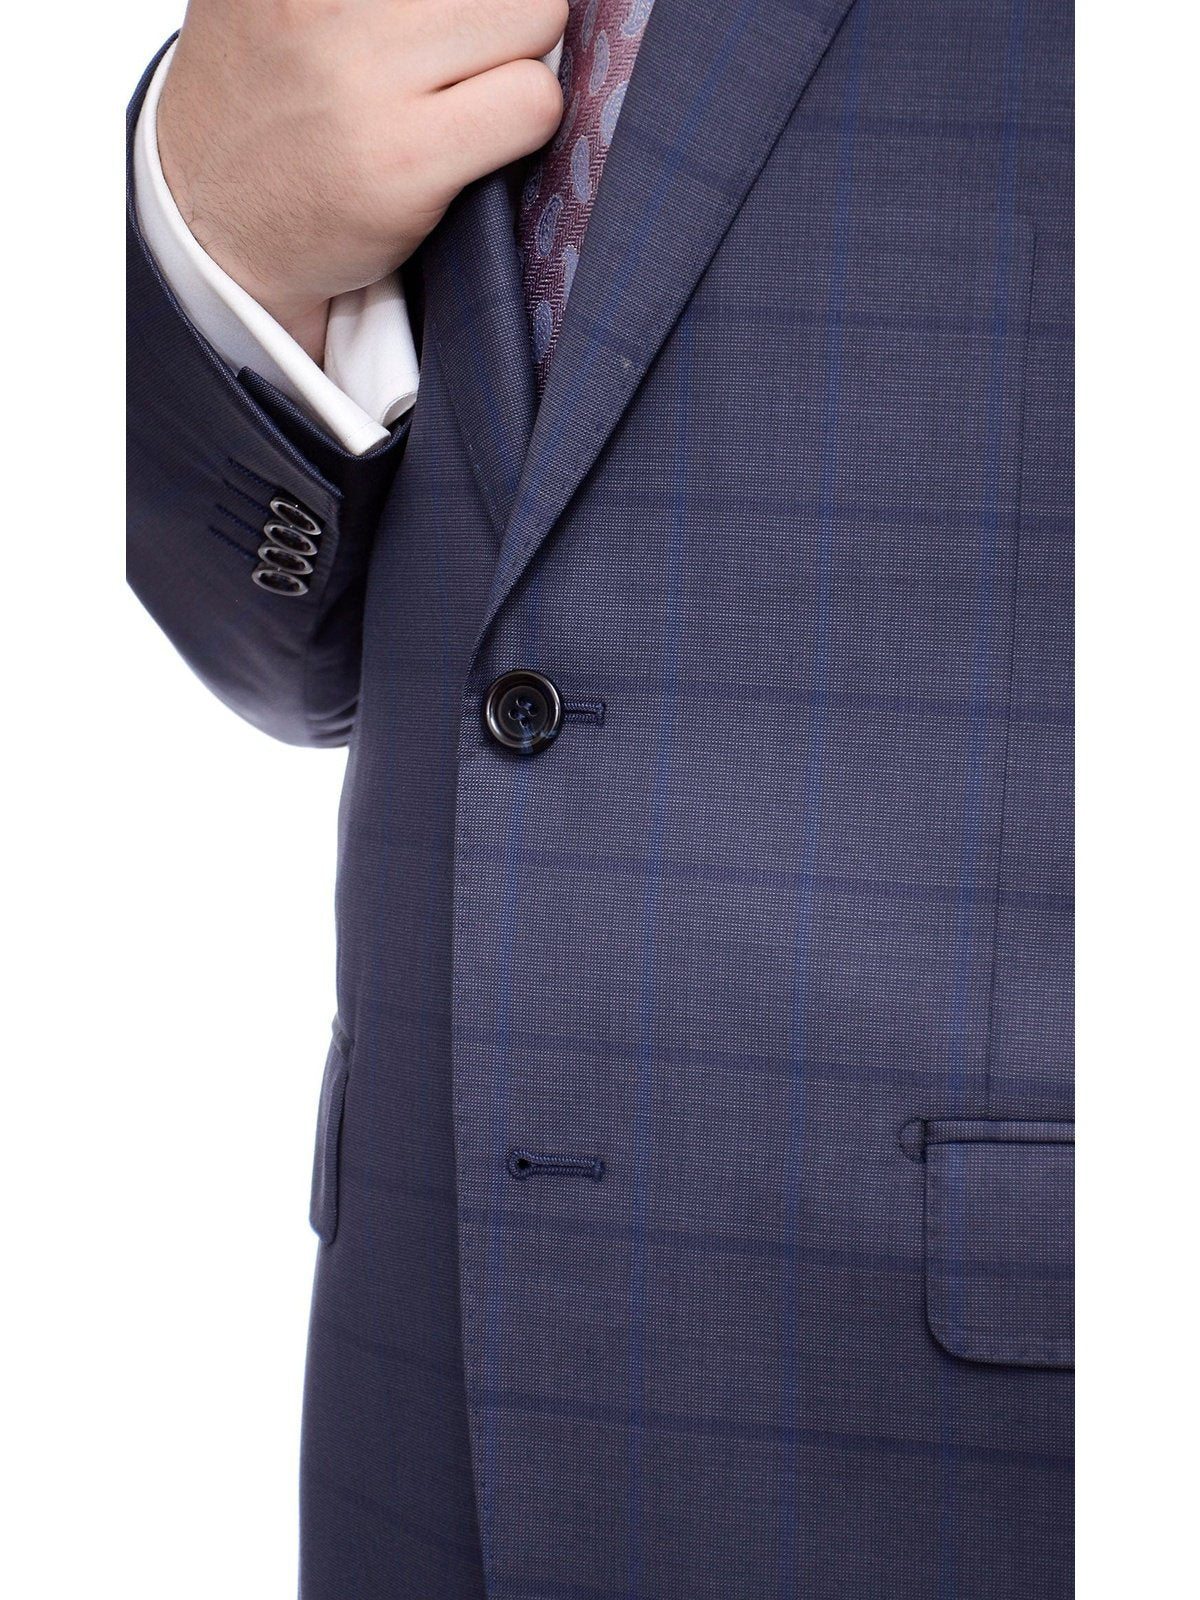 Napoli TWO PIECE SUITS Napoli Classic Fit Blue Plaid Half Canvassed Lanificio Tg Di Fabio Wool Suit